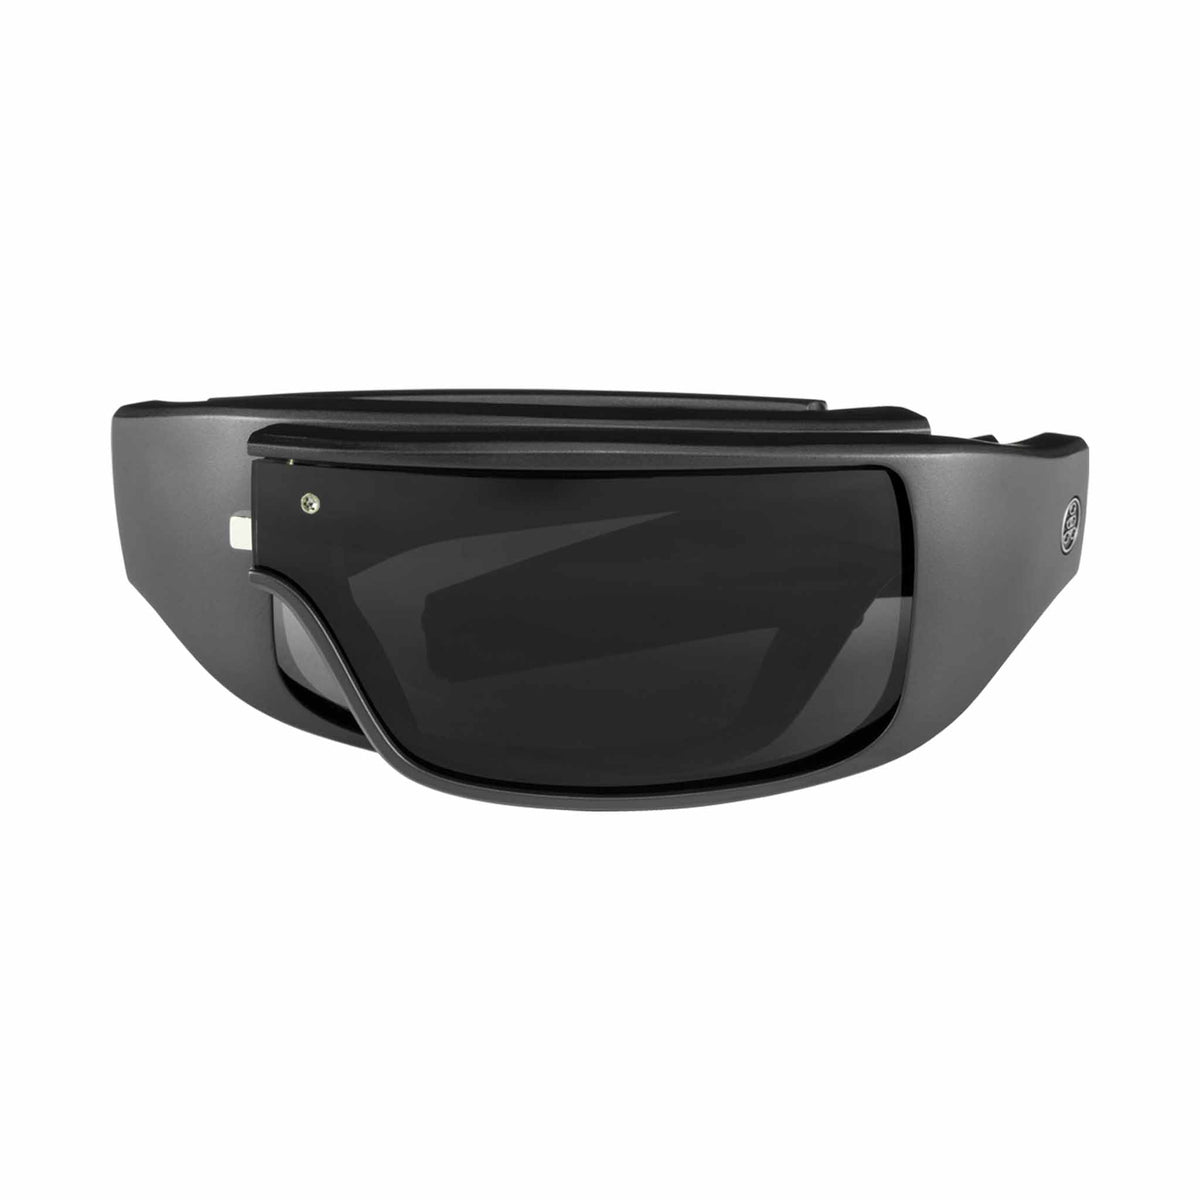 Popticals, Premium Compact Sunglasses, PopGear, 010050-BMGS, Standard Sunglasses, Matte Black Frames, Gray Lenses, Compact View